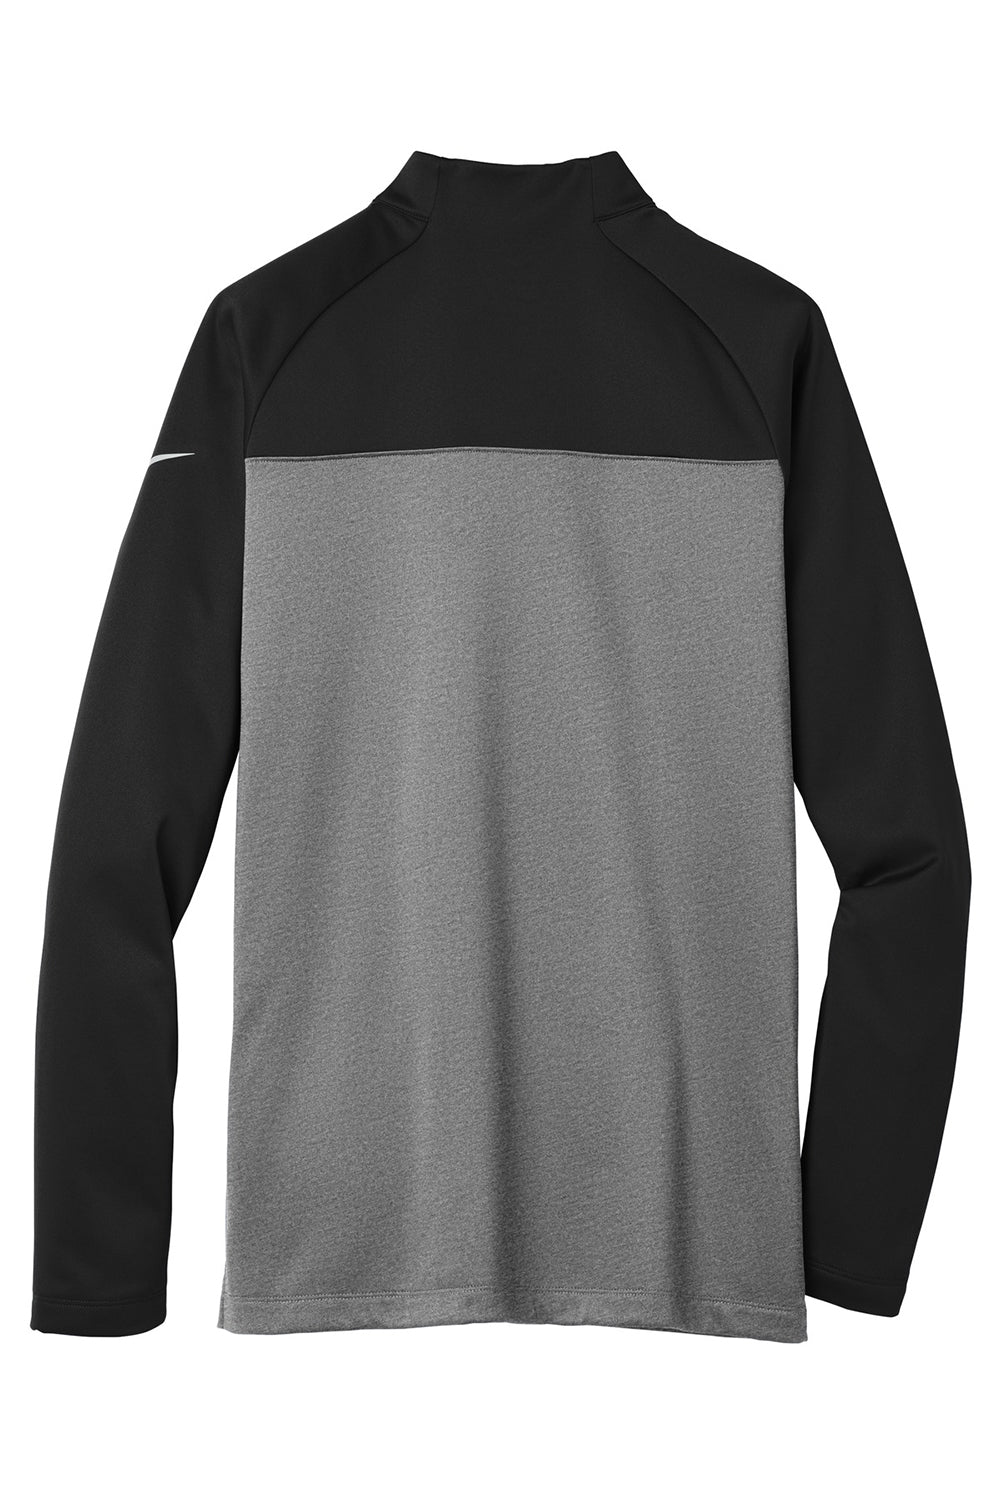 Nike NKAH6254 Mens Therma-Fit Moisture Wicking Fleece 1/4 Zip Sweatshirt Black/Heather Grey Flat Back